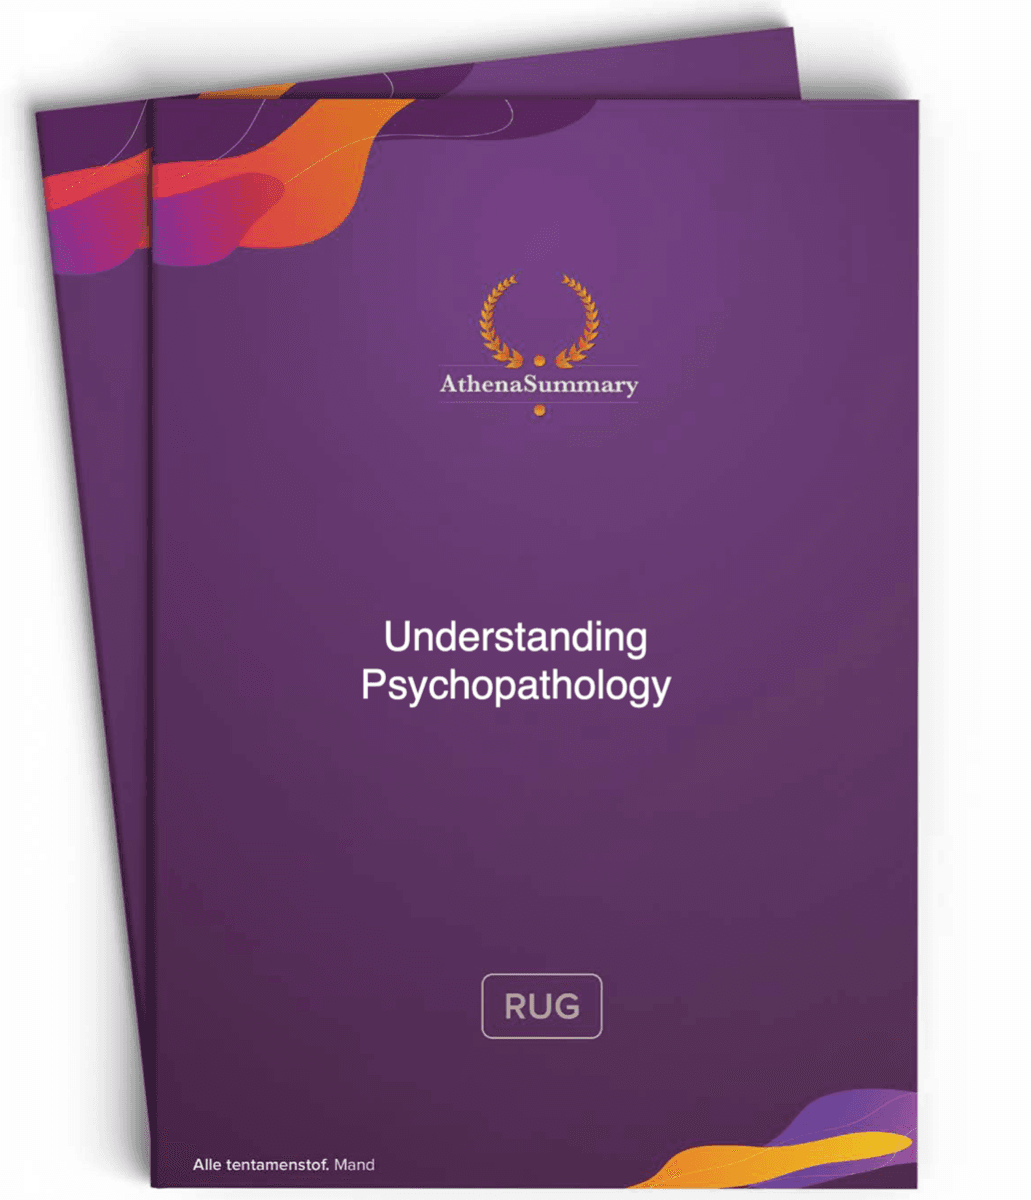 Literature summary: Understanding Psychopathology